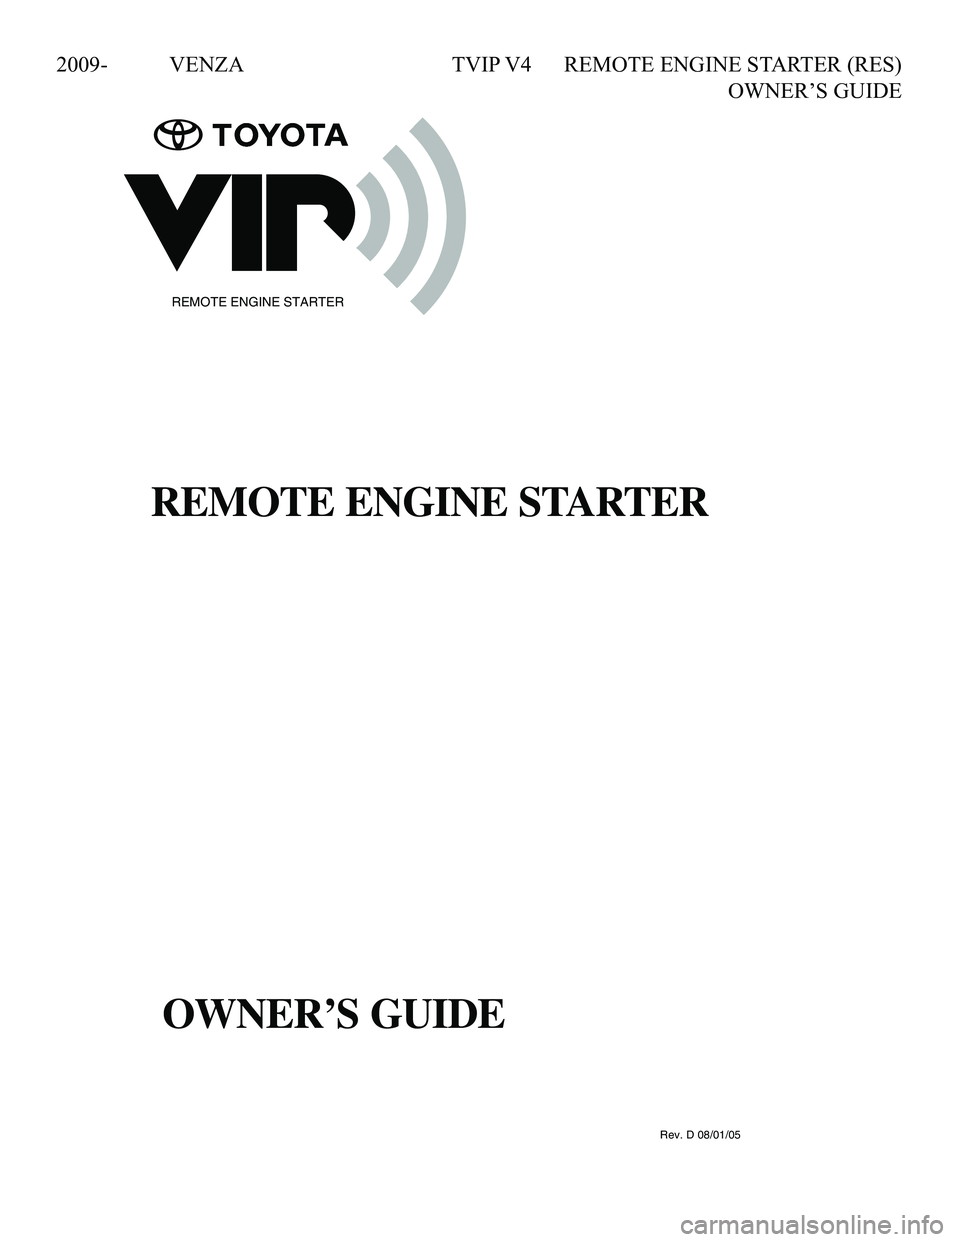 TOYOTA VENZA 2009  Accessories, Audio & Navigation (in English) 2009- VENZA  TVIP V4 REMOTE ENGINE STARTER (RES) 
     OWNER’S GUIDE
090002-28930700Rev. D 08/01/05
REMOTE ENGINE STARTER
REMOTE ENGINE STARTER
OWNER'S GUIDE
 
REMOTE ENGINE STARTER
OWNER’S GU